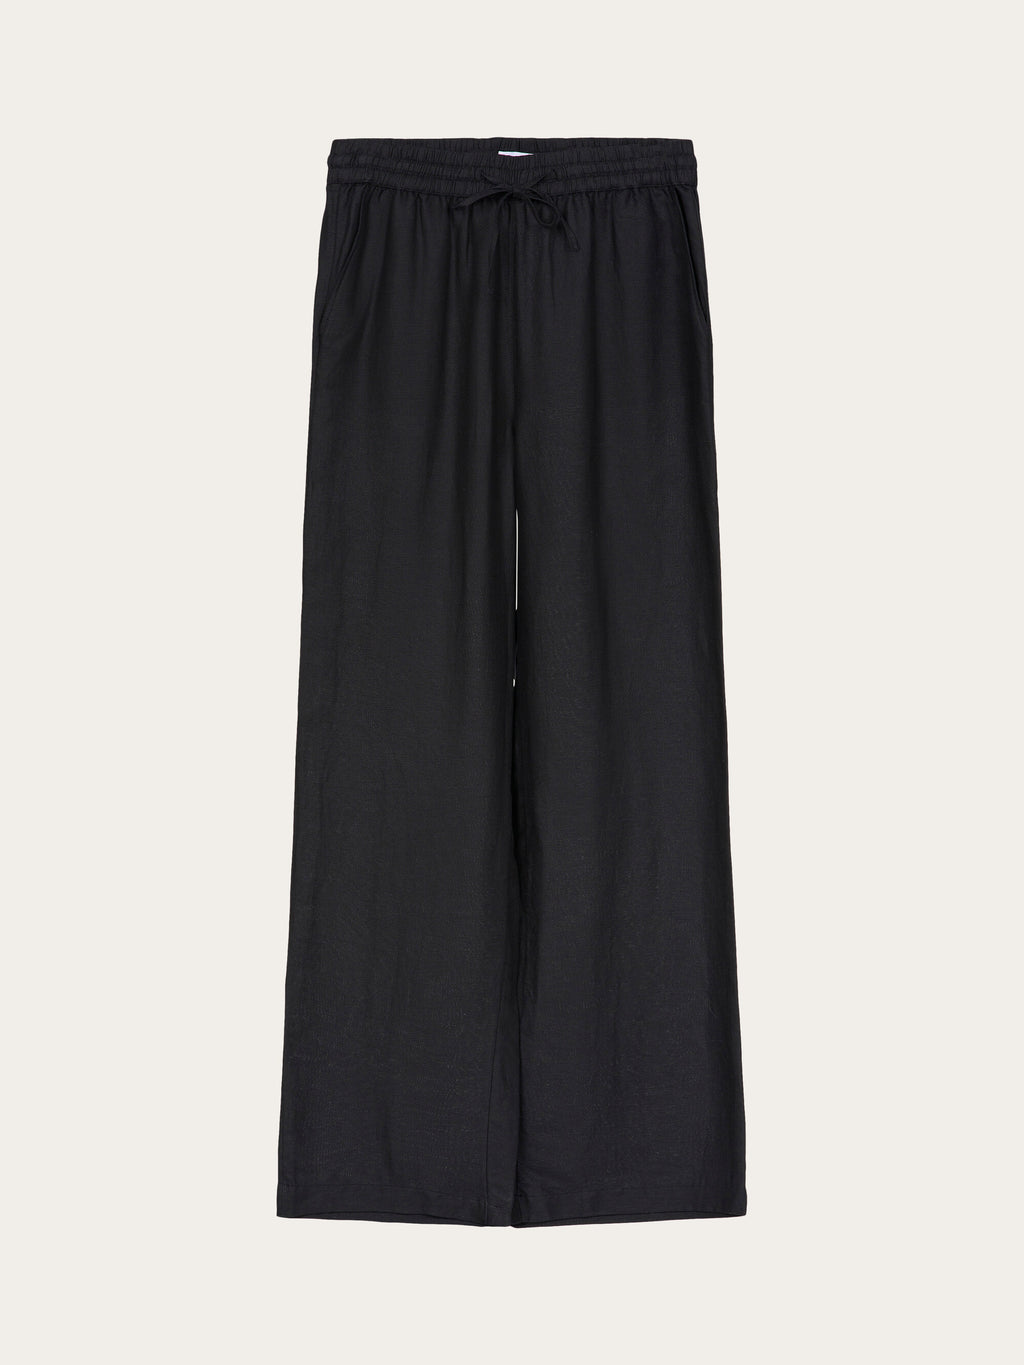 INC ~ Sz 14 ~ Dress Pants Jet Black Rayon Nylon Spandex w/ wide elastic  waist